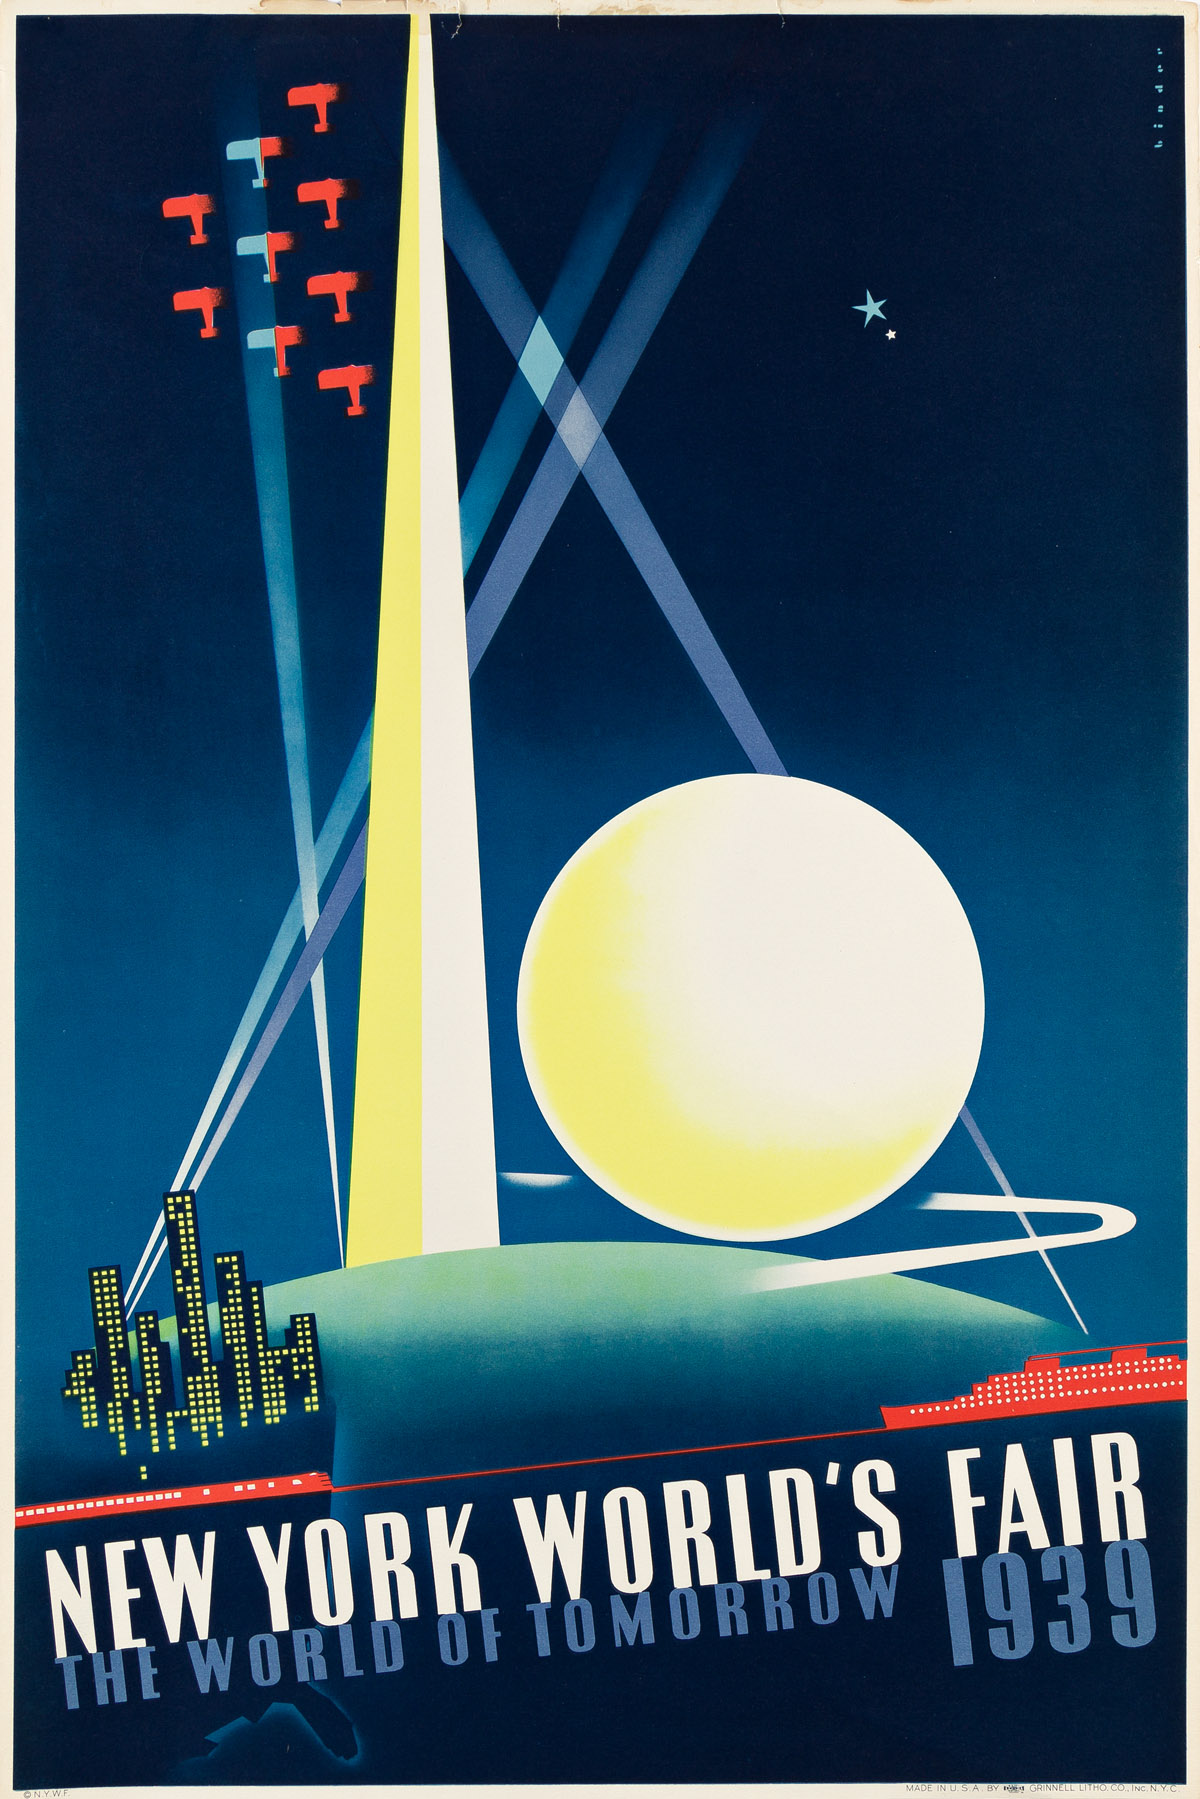 JOSEPH BINDER (1898-1972) New York Worlds Fair.